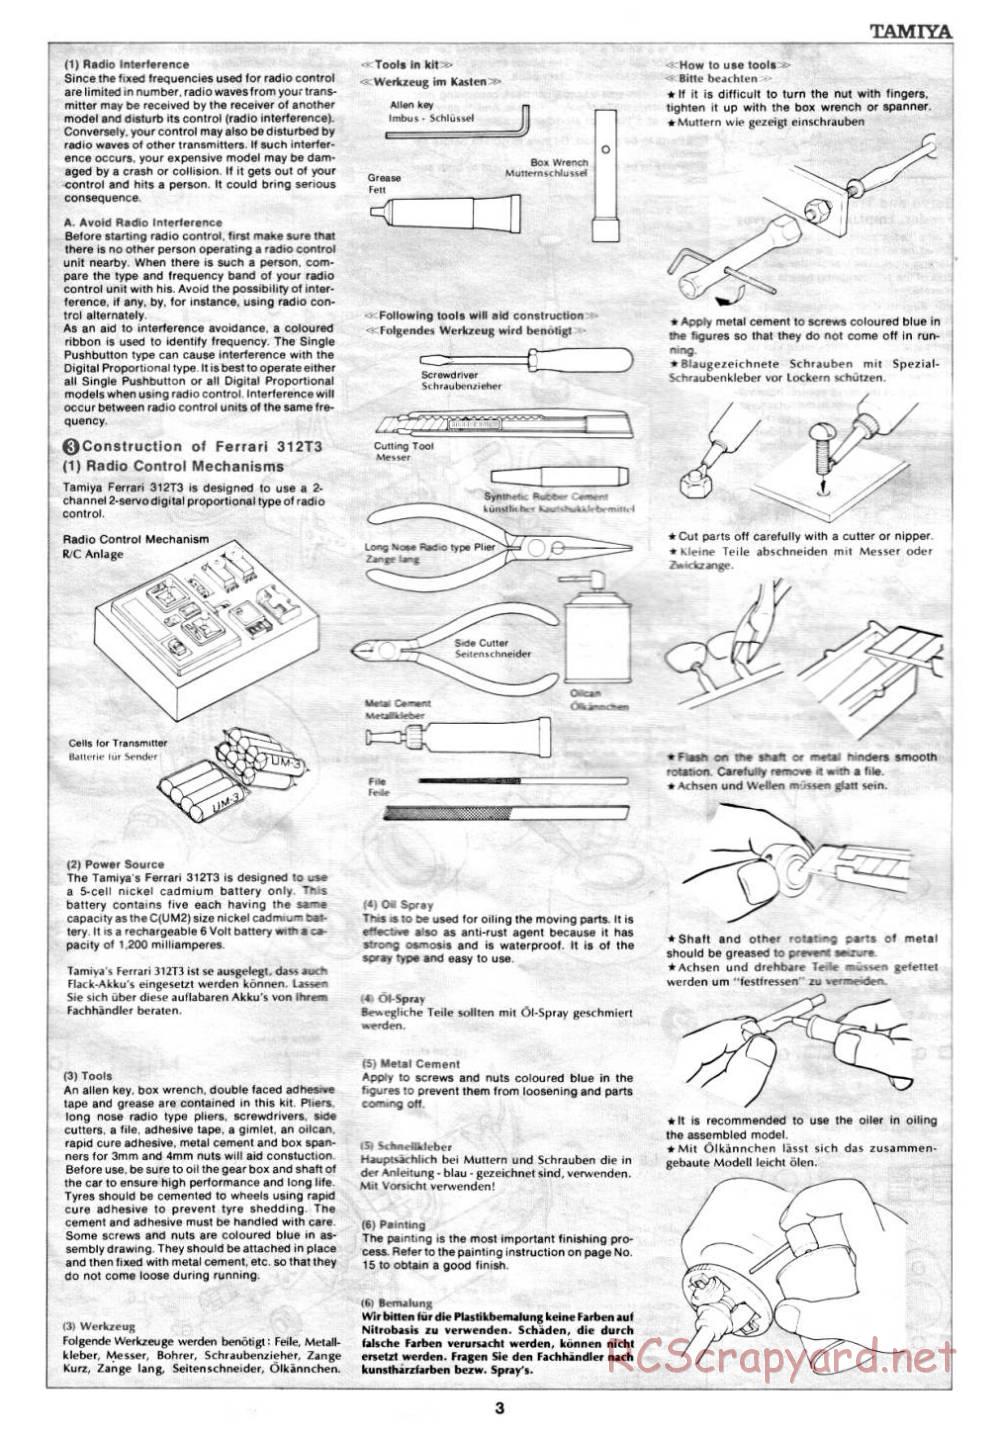 Tamiya - Ferrari 312T3 - 58011 - Manual - Page 3